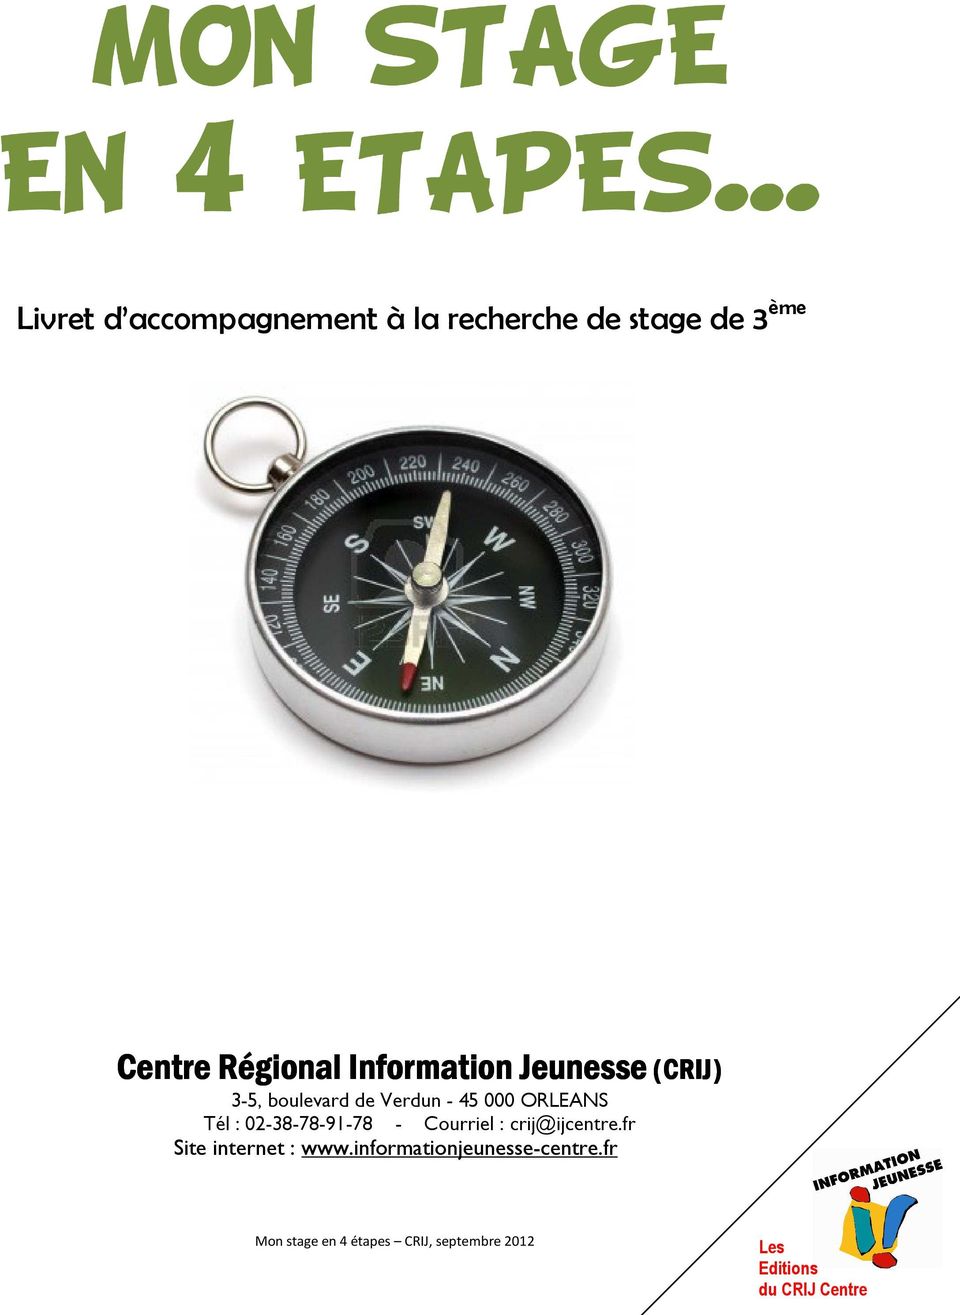 Régional Information Jeunesse (CRIJ) 3-5, boulevard de Verdun - 45 000